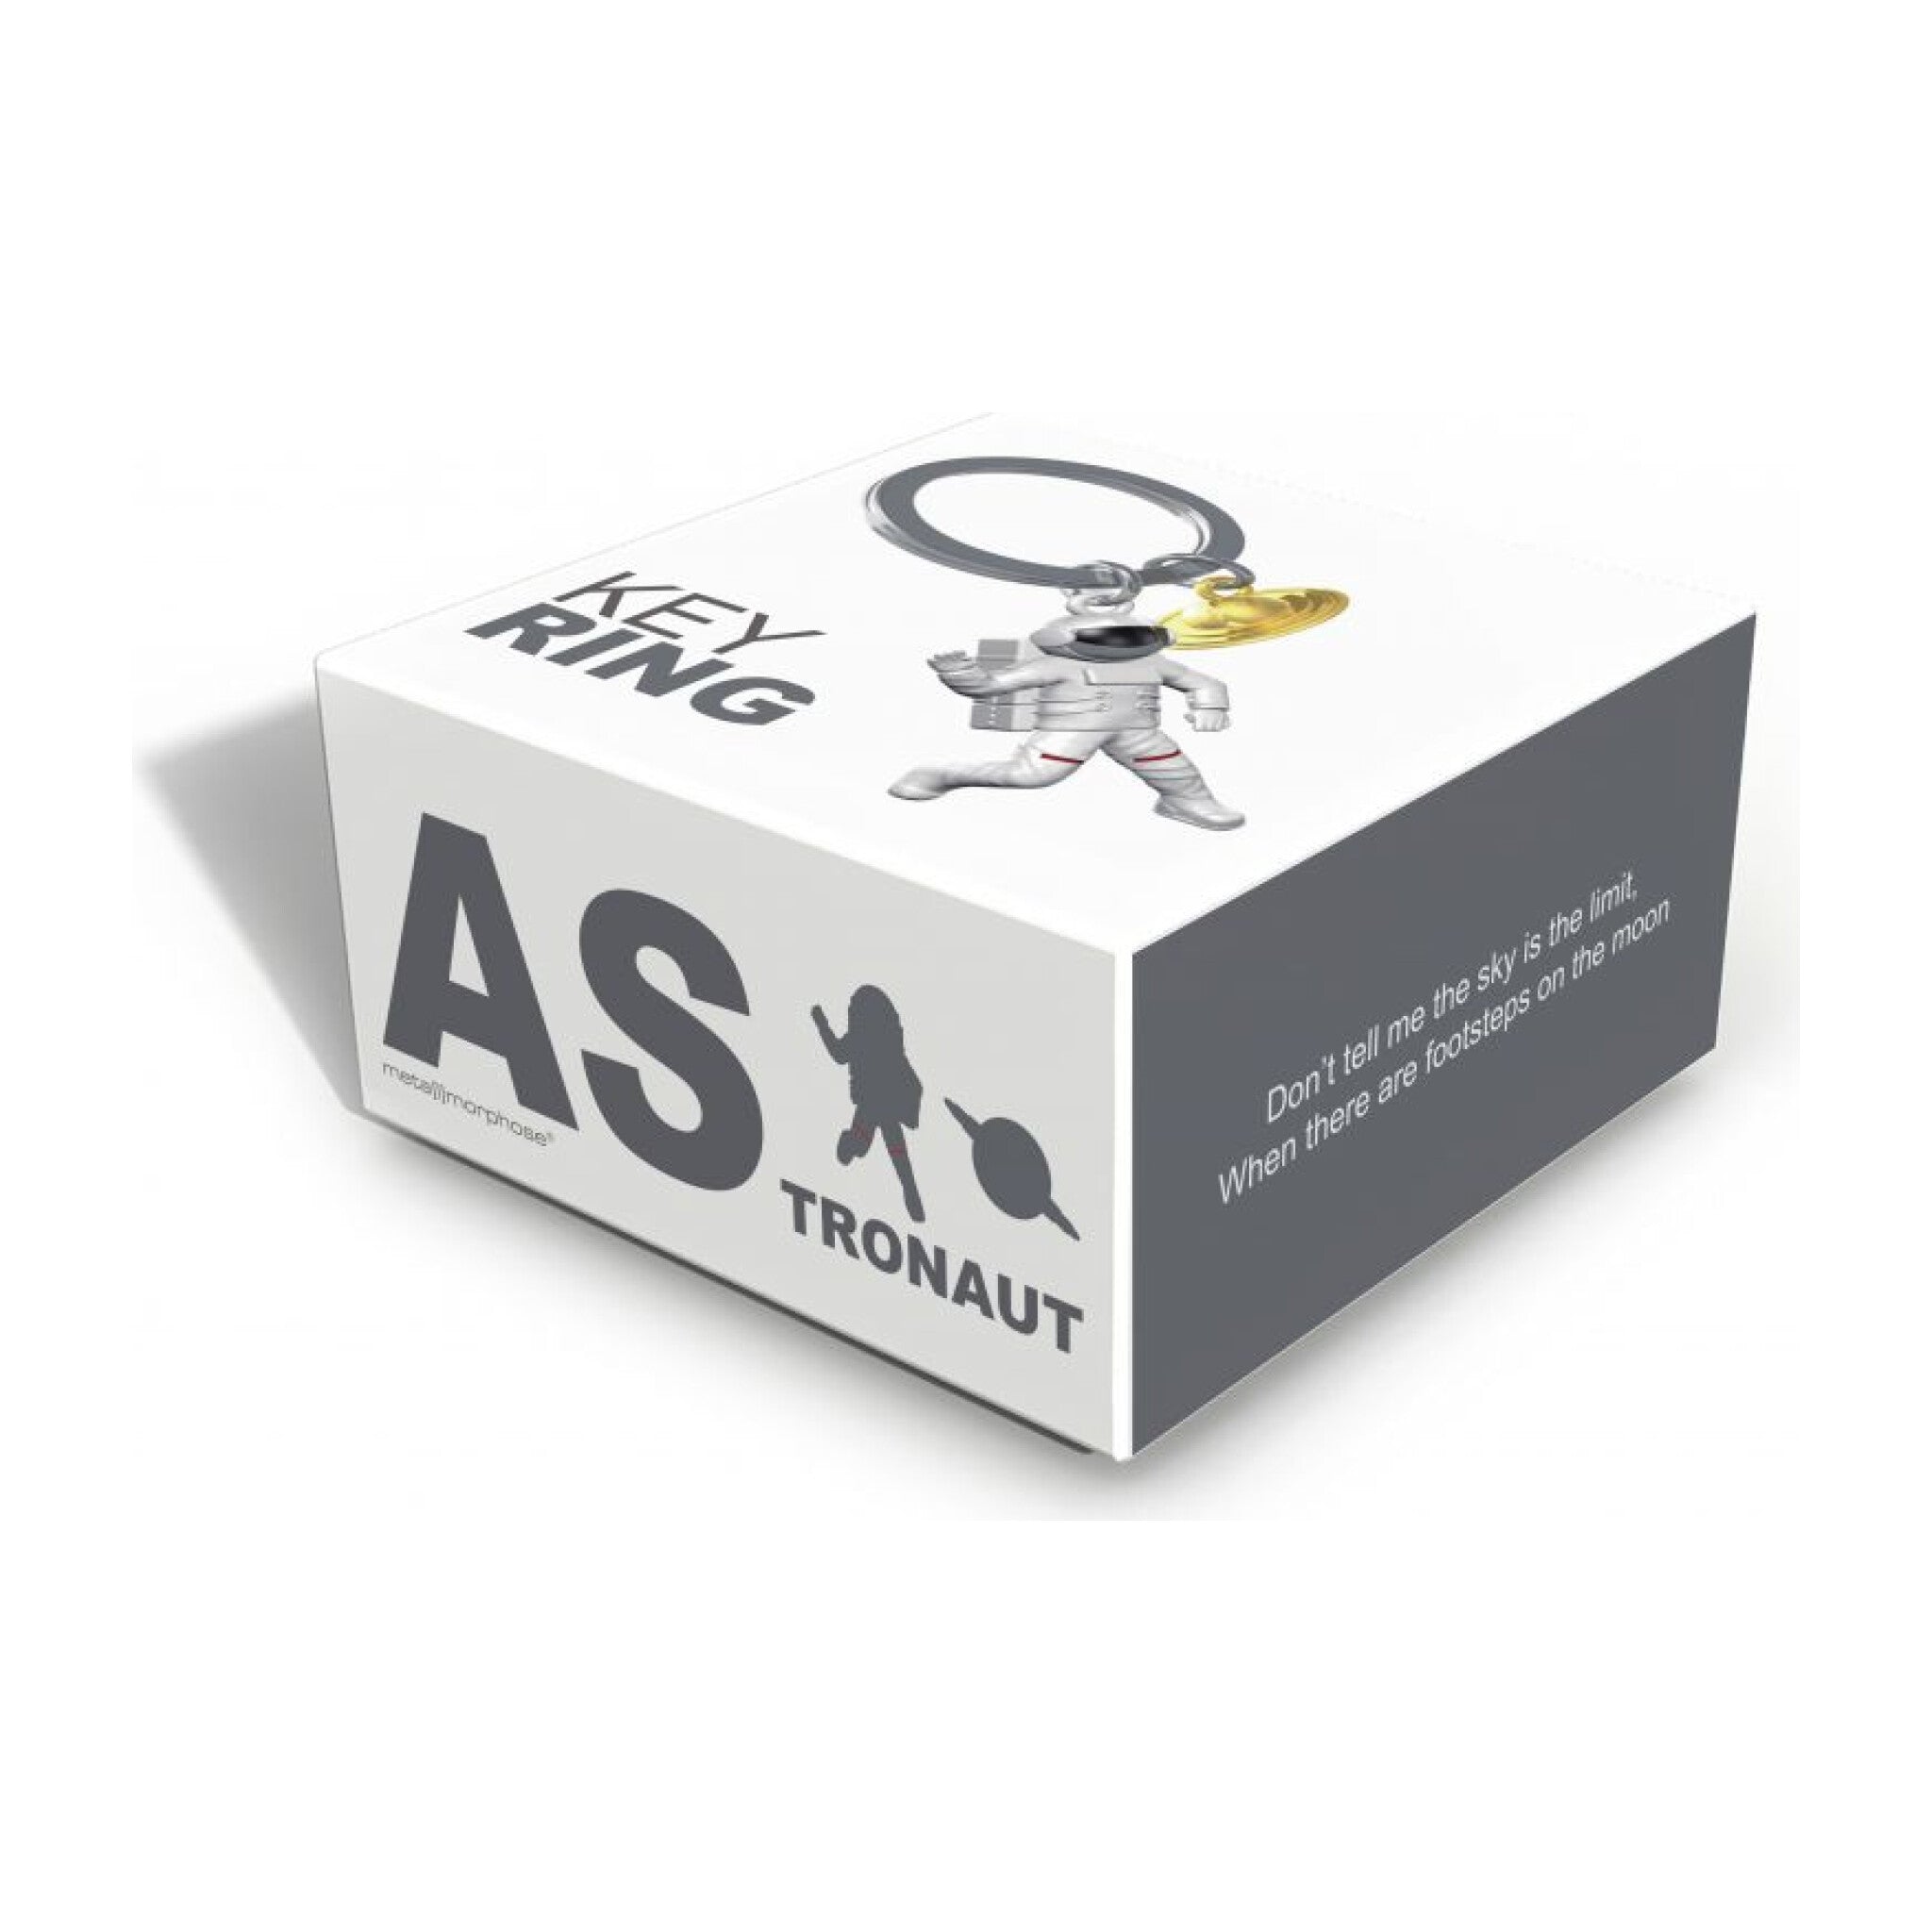 ApolloBox Creative Astronaut Keychain - Zinc Alloy - Gold - Silver - Black